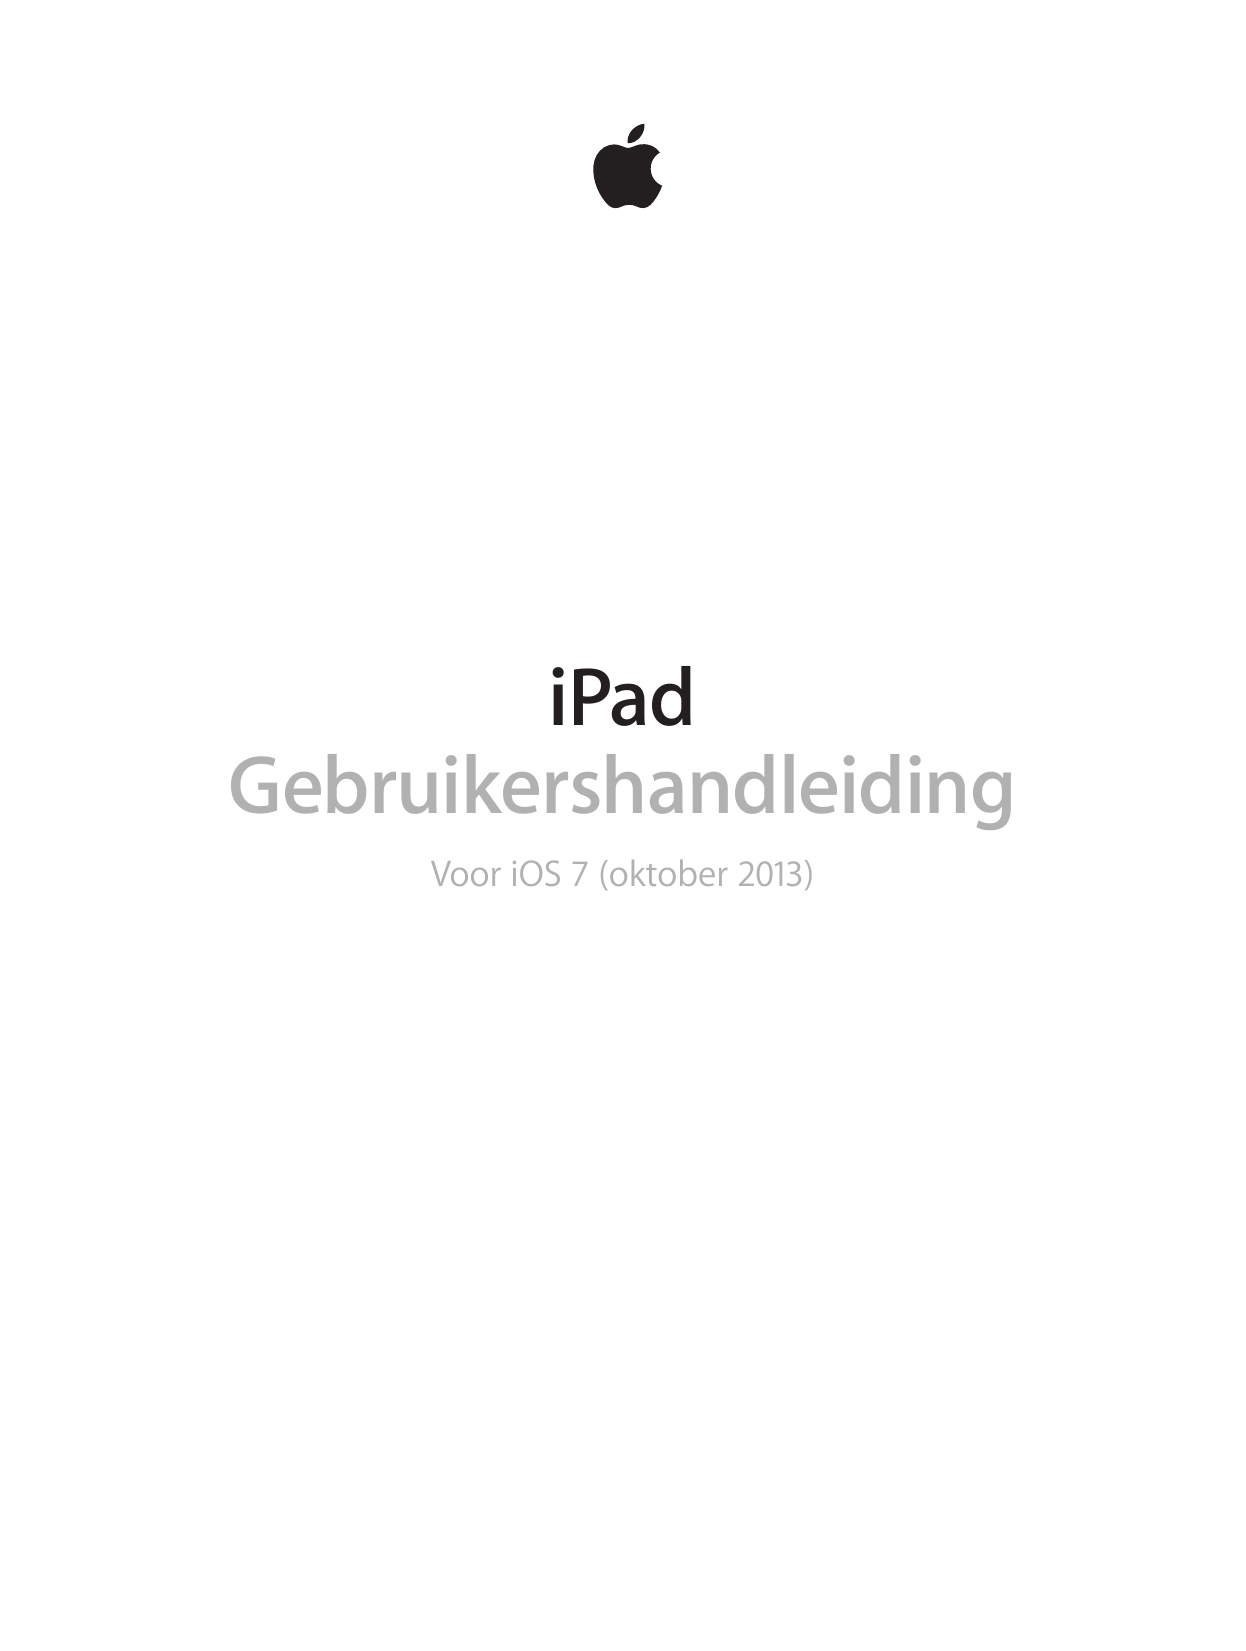 iPadGebruikershandleidingVoor iOS 7 (oktober 2013)